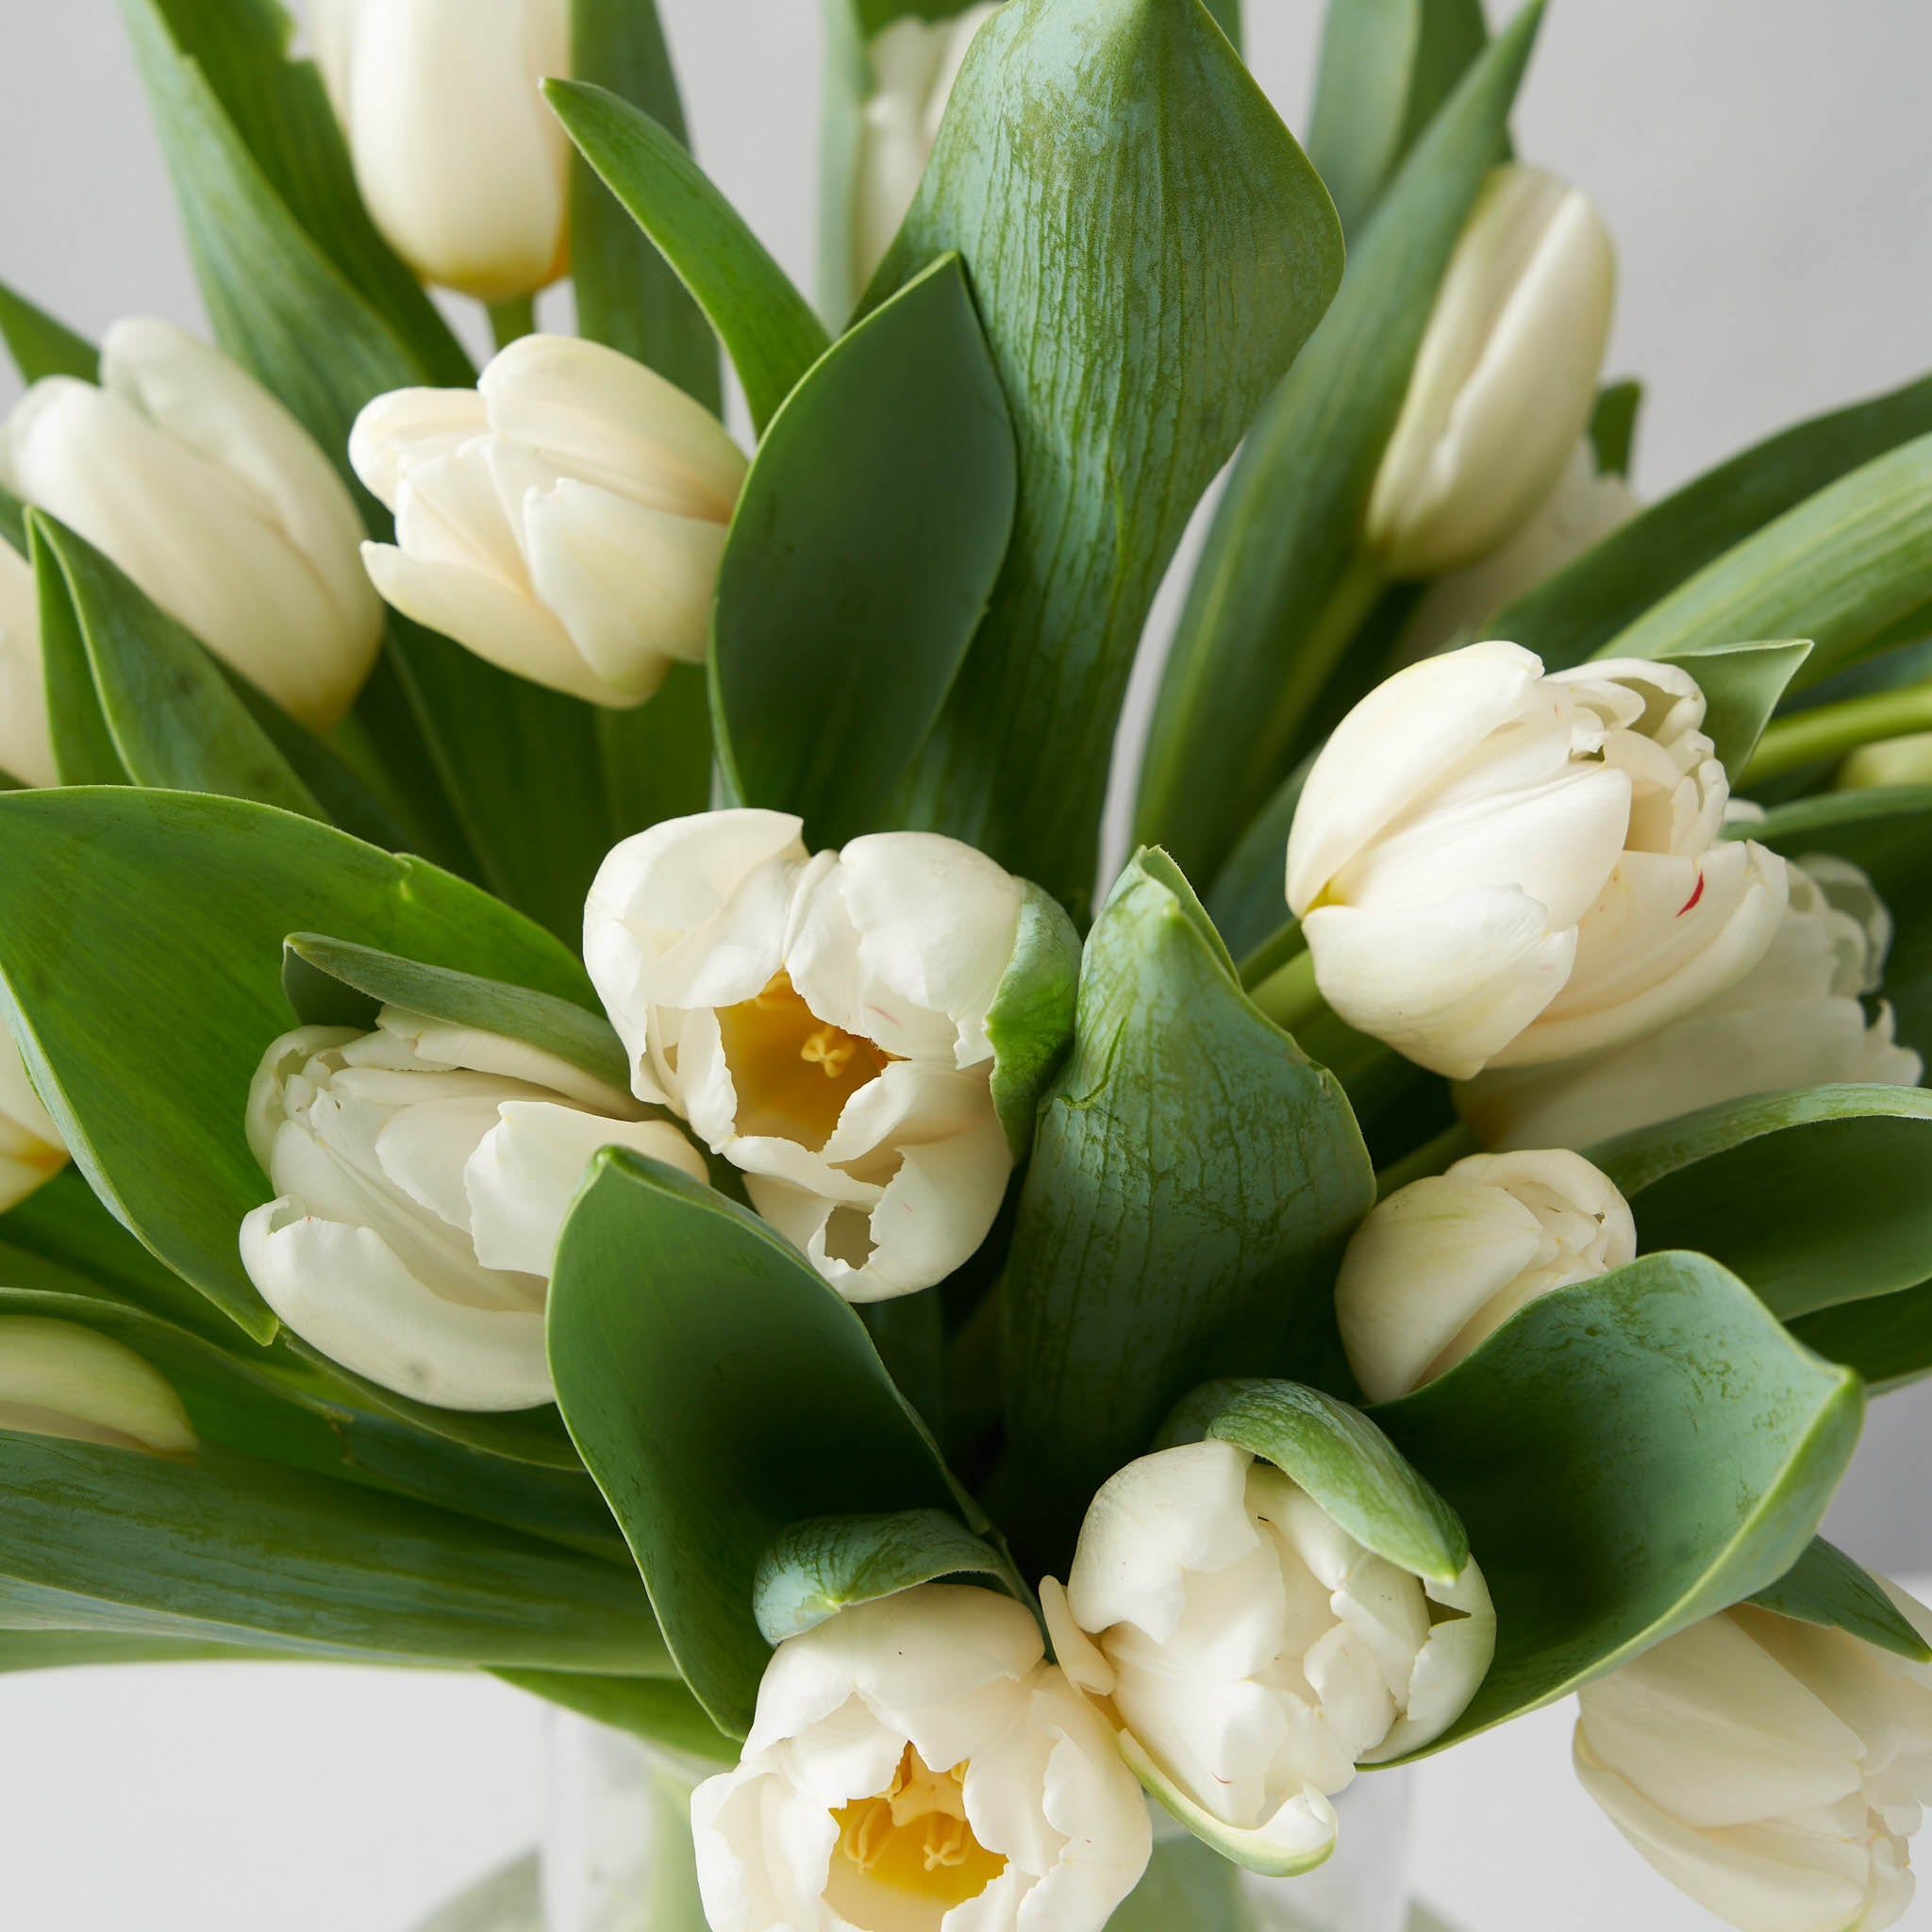 Willa (Tulipes blanches arrangées)